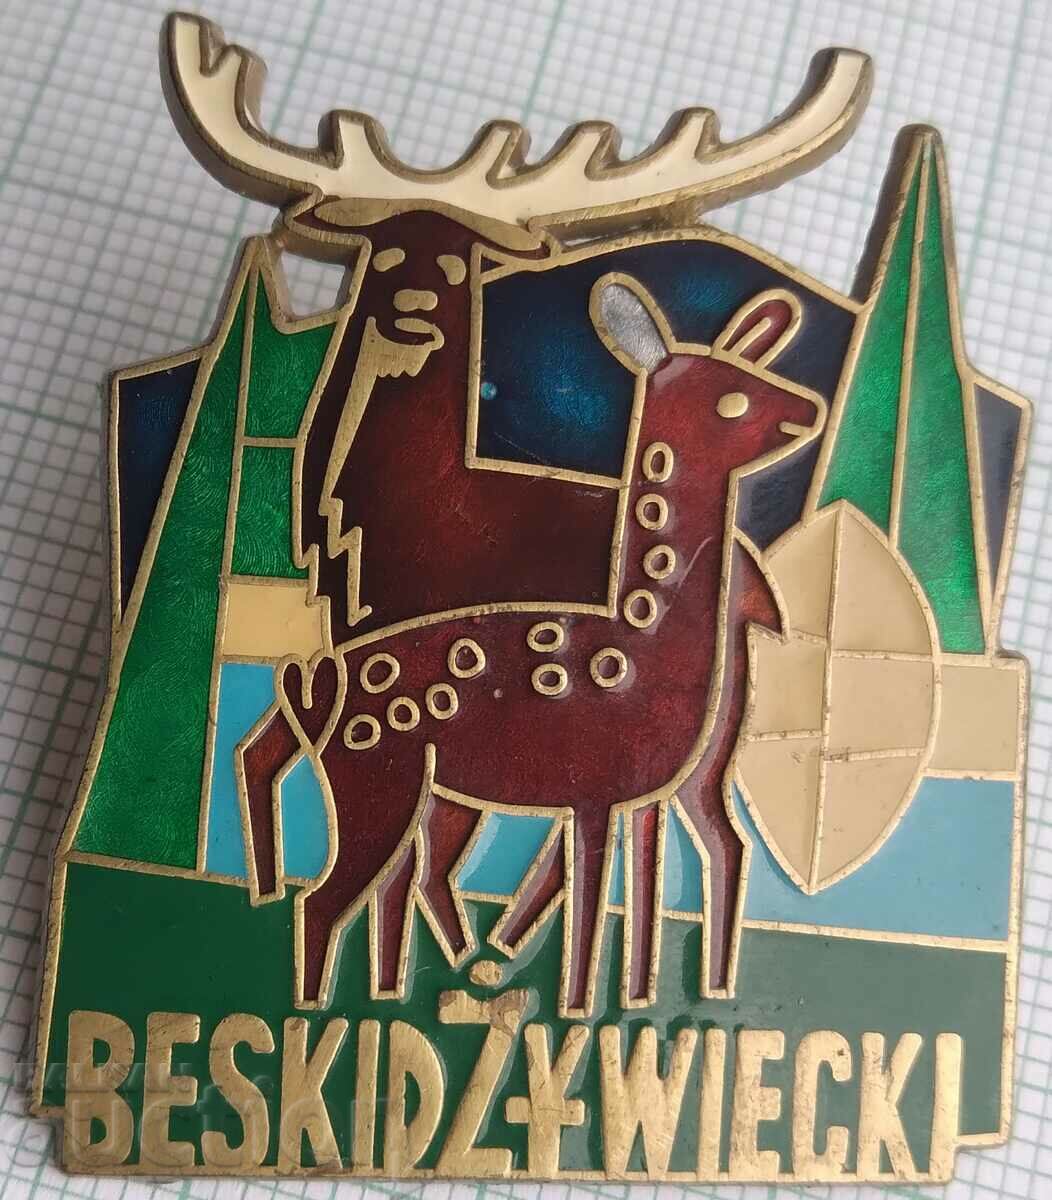 15766 Значка - Beskidżywiecki - Полша - емайл винт